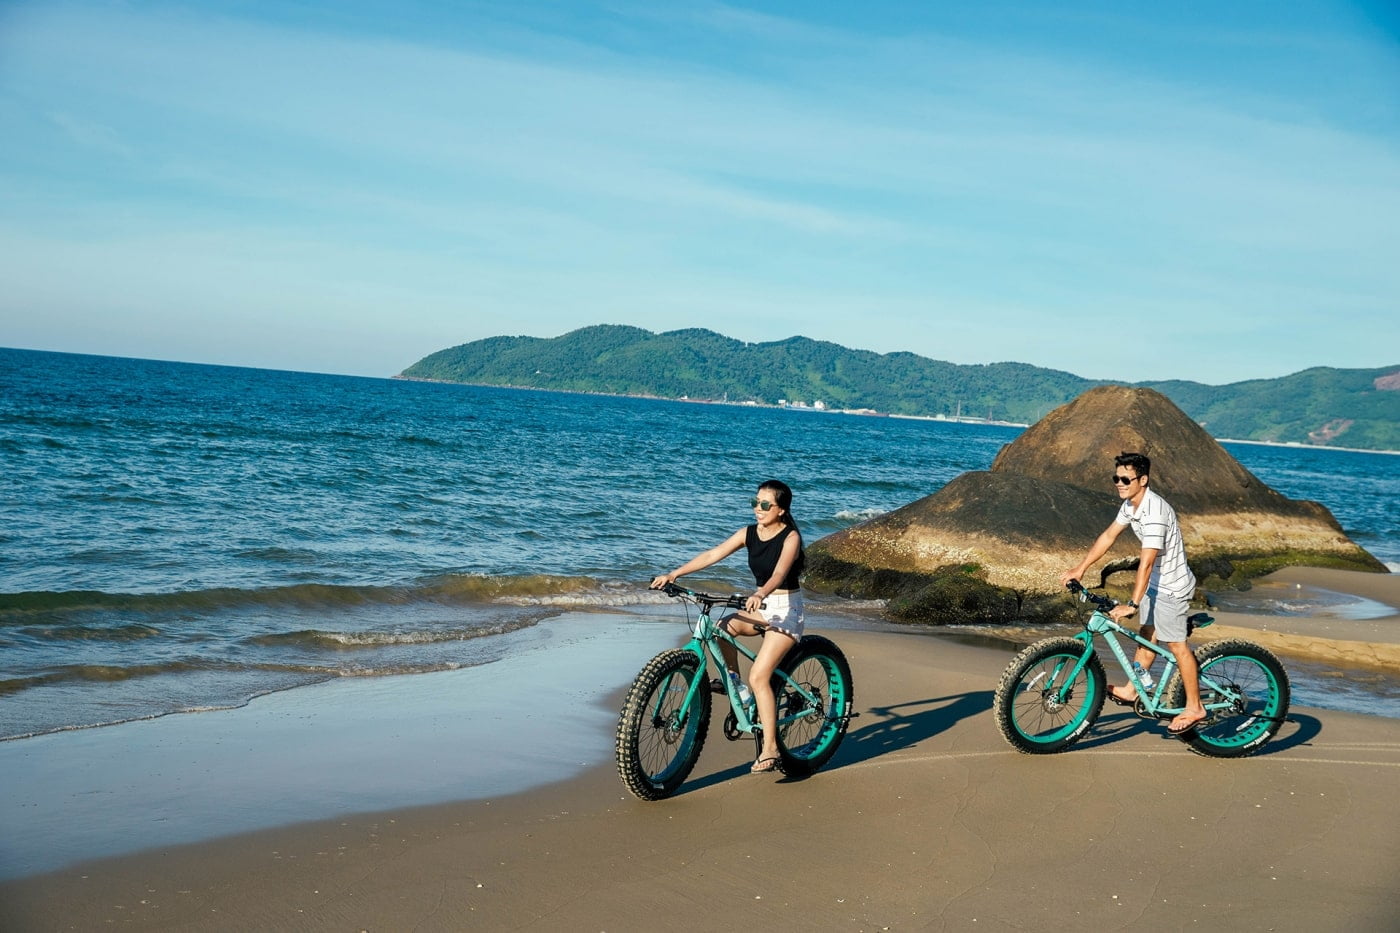 Fatboy Bike Laguna lang co luxury beach resort facilities photo 1400x933 min